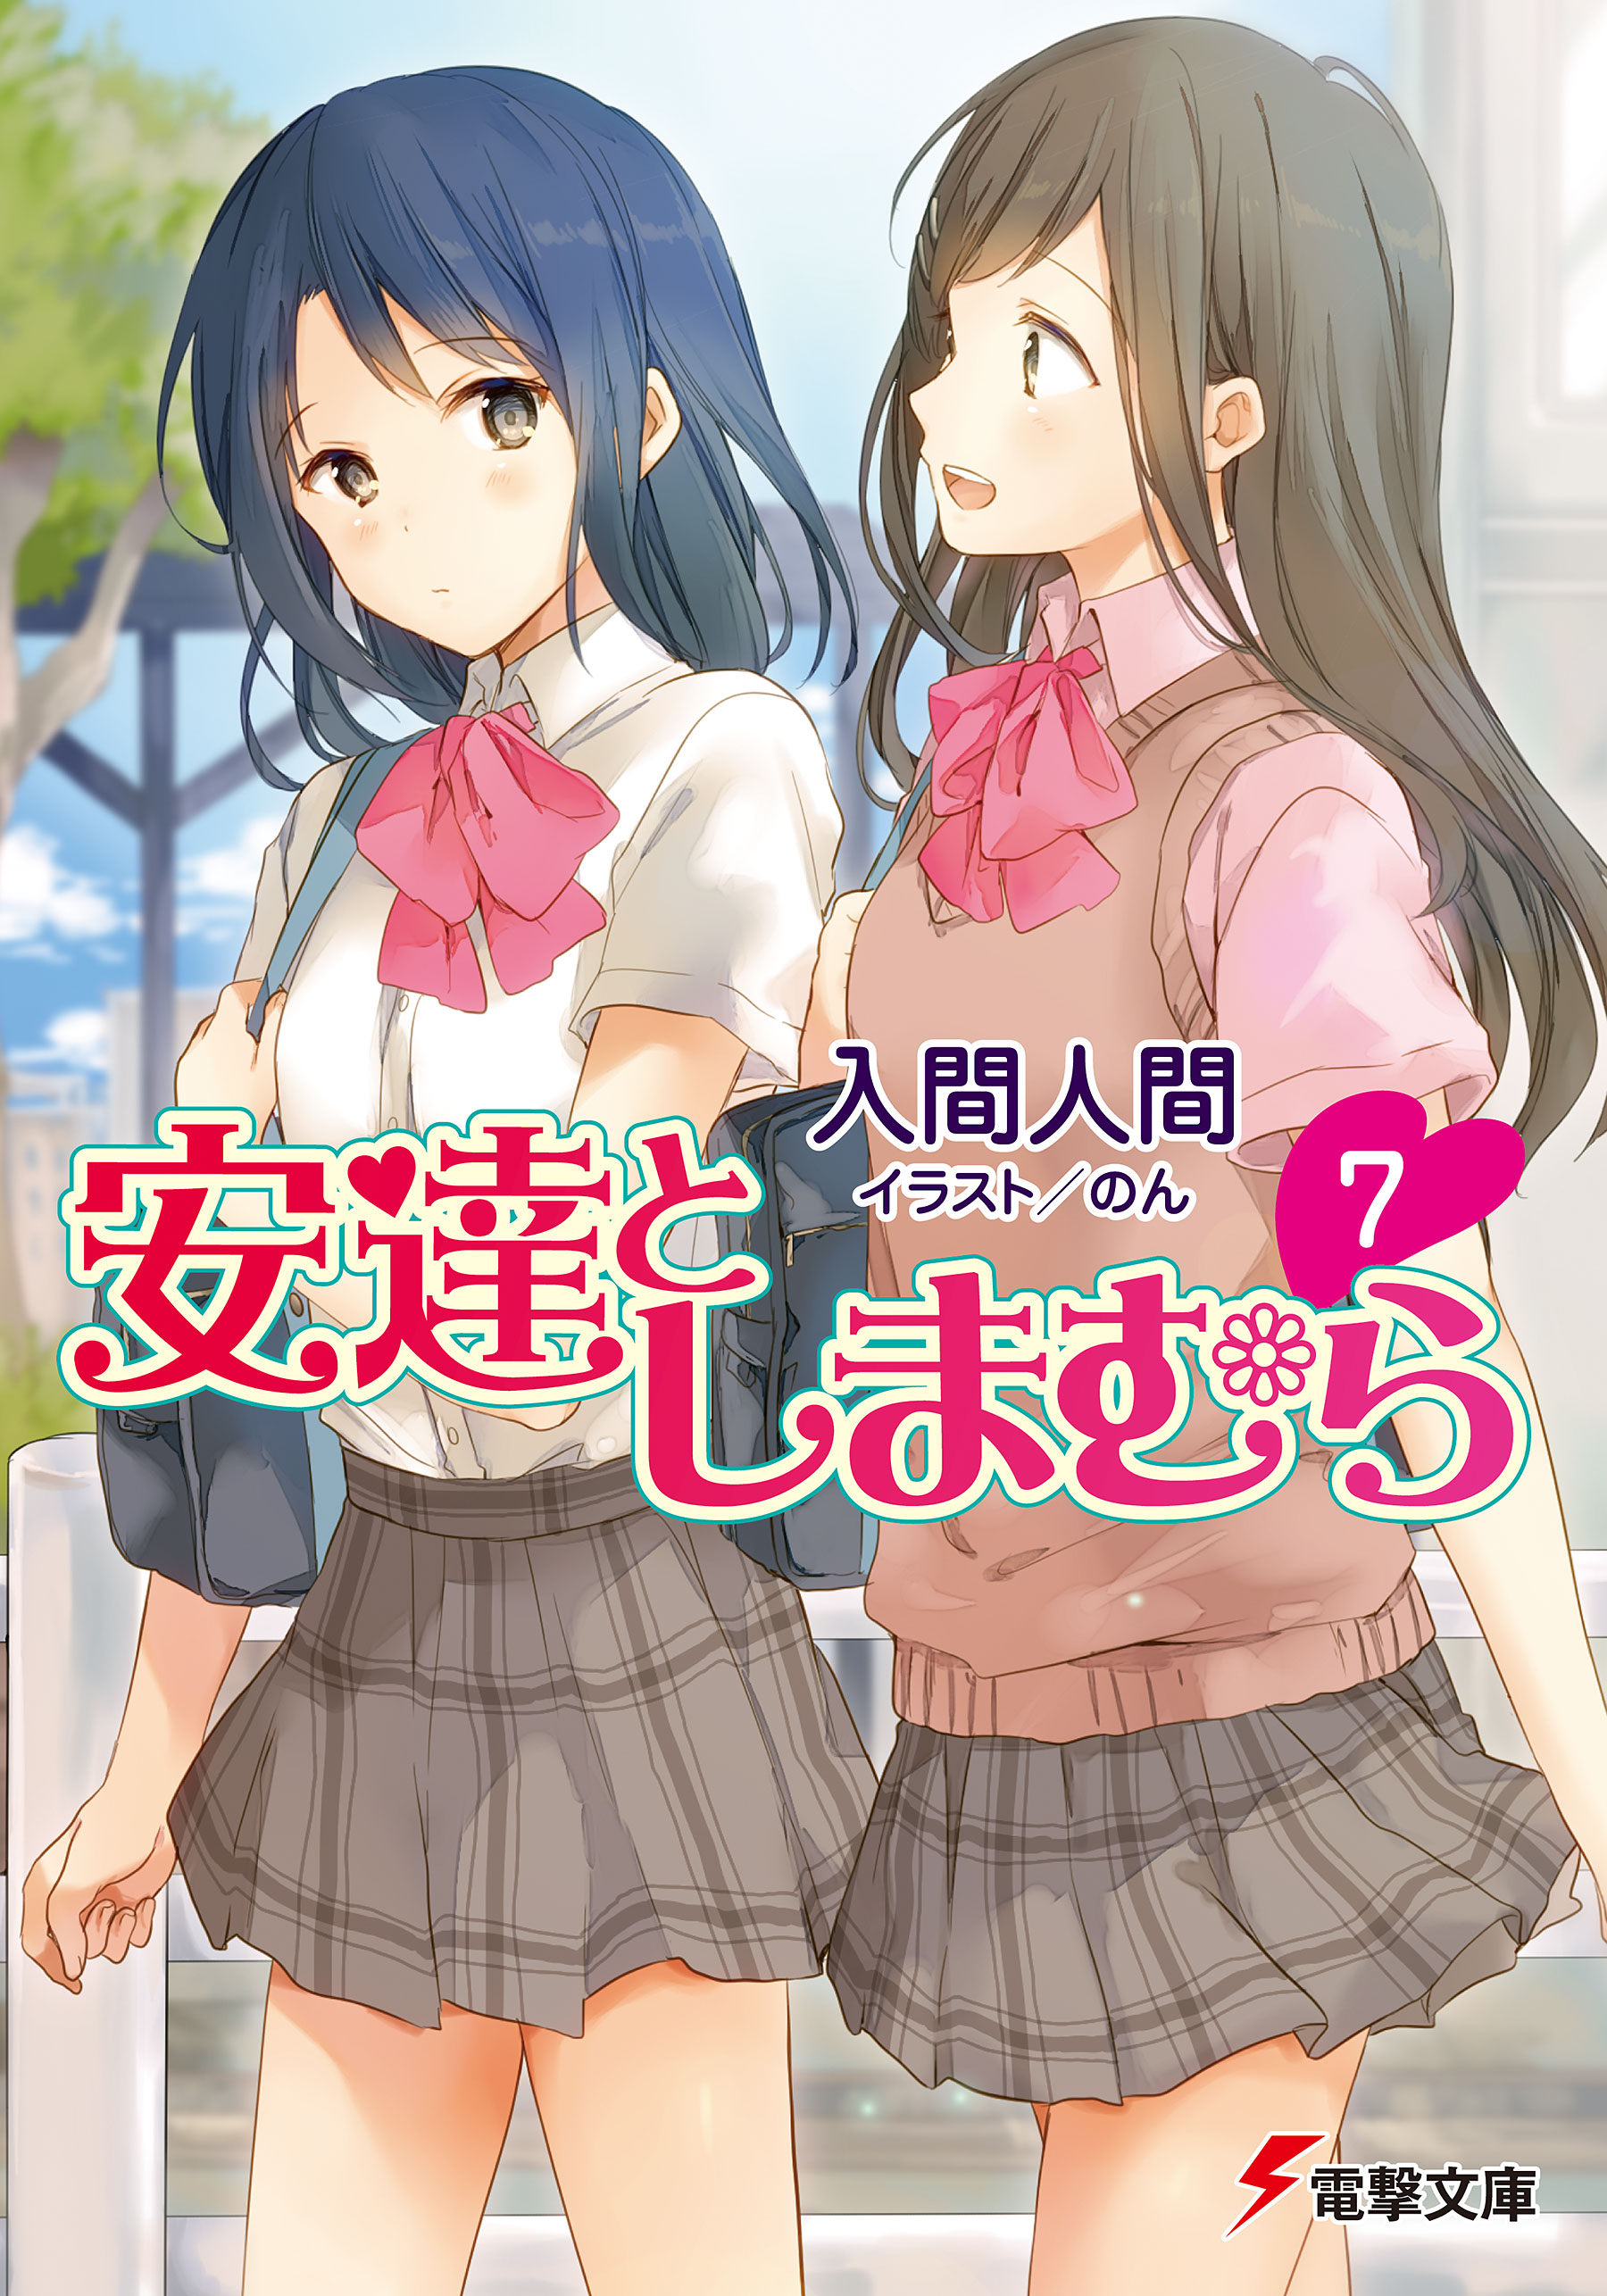 Adachi and Shimamura Vol. 4 by Hitomi Iruma / NEW Yuri manga from Seven  Seas